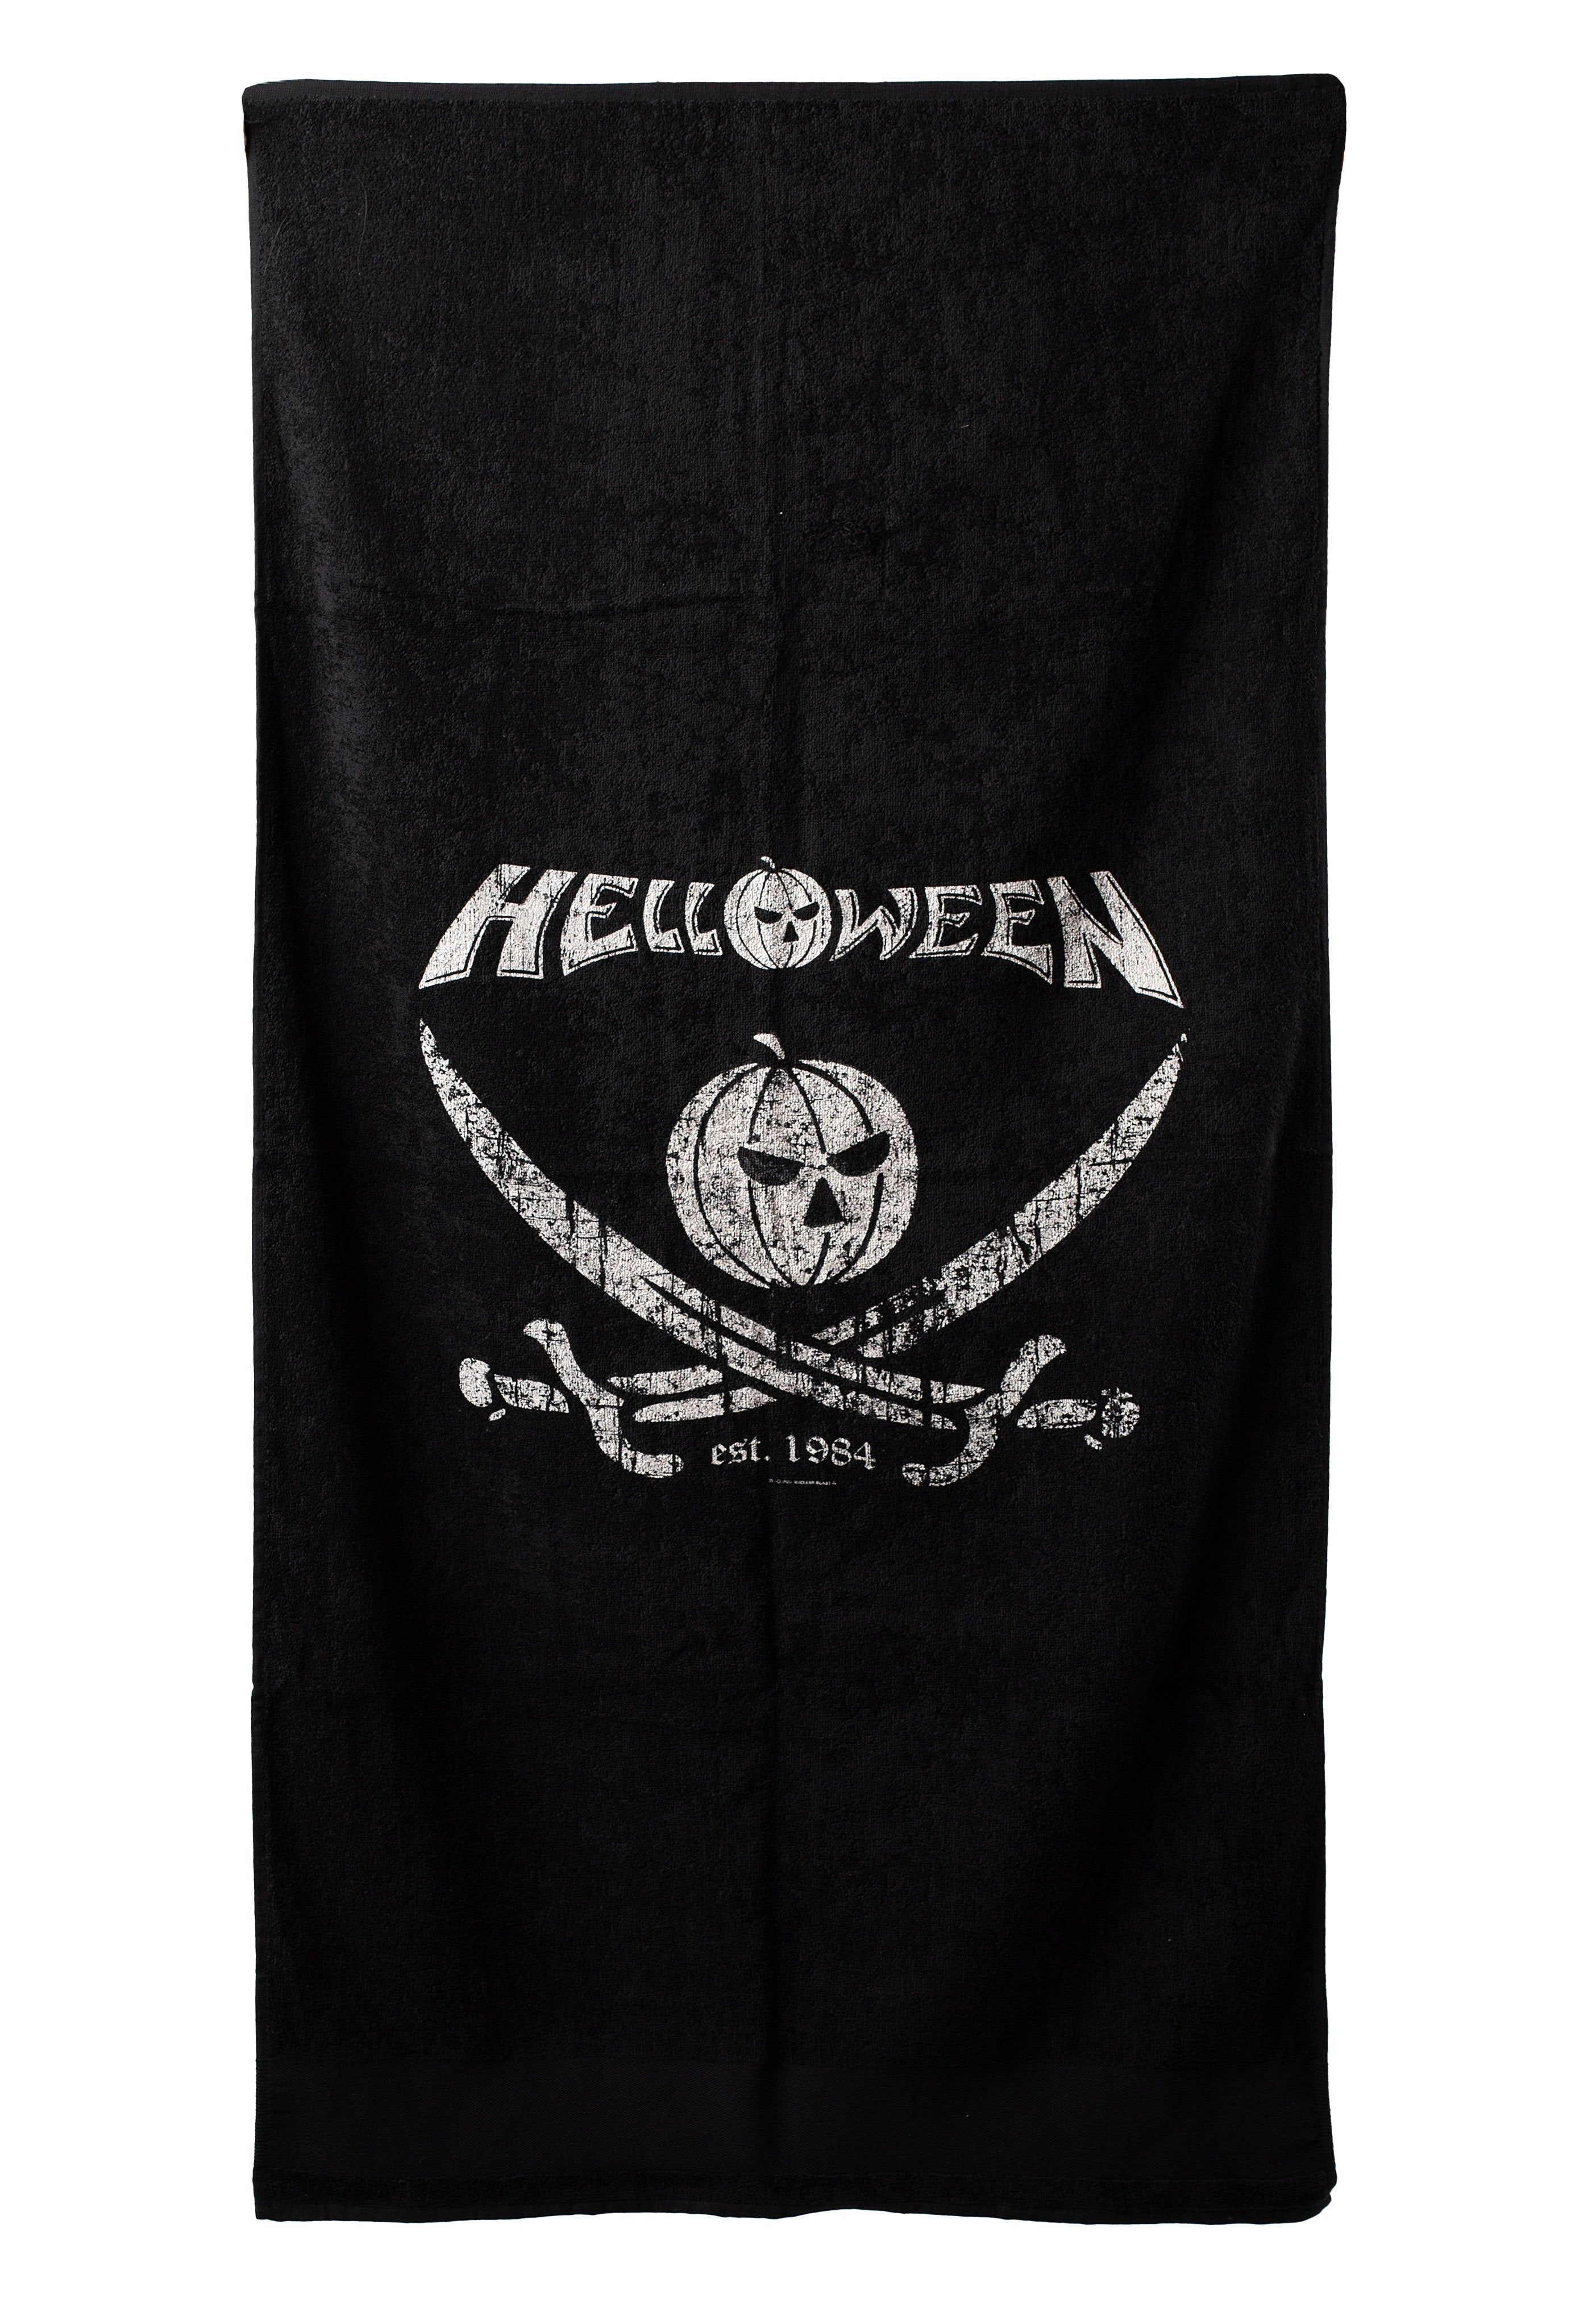 Helloween - Pirate Bath - Towel